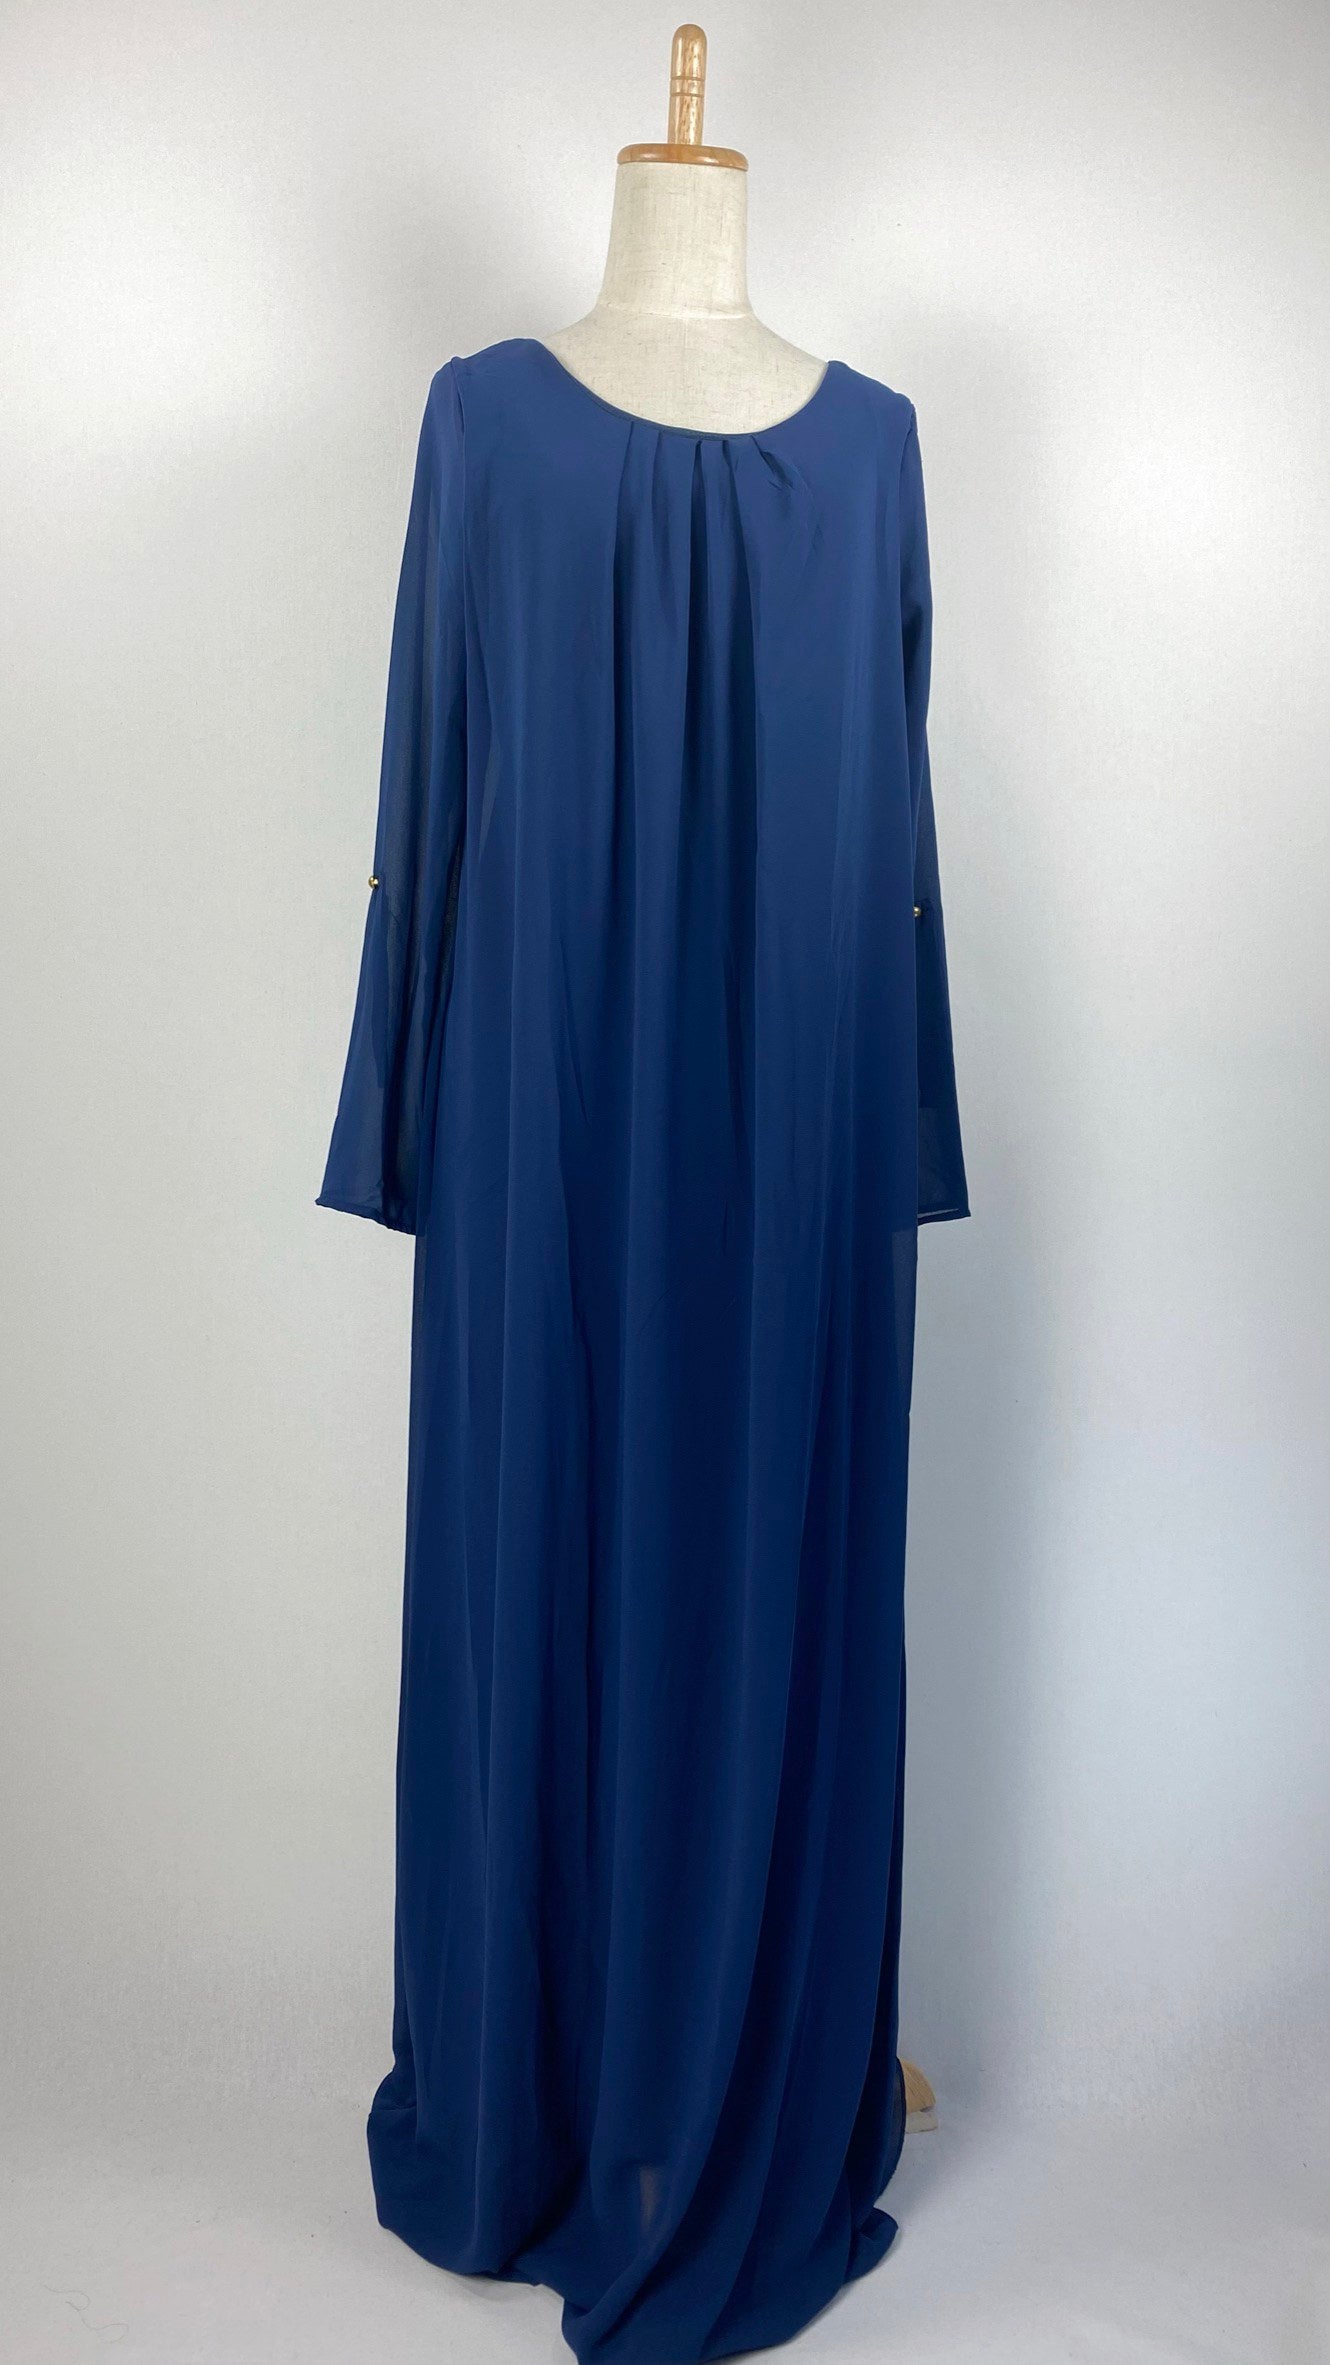 Long Sleeve Sheer with Lining Maxi Dress, Navy